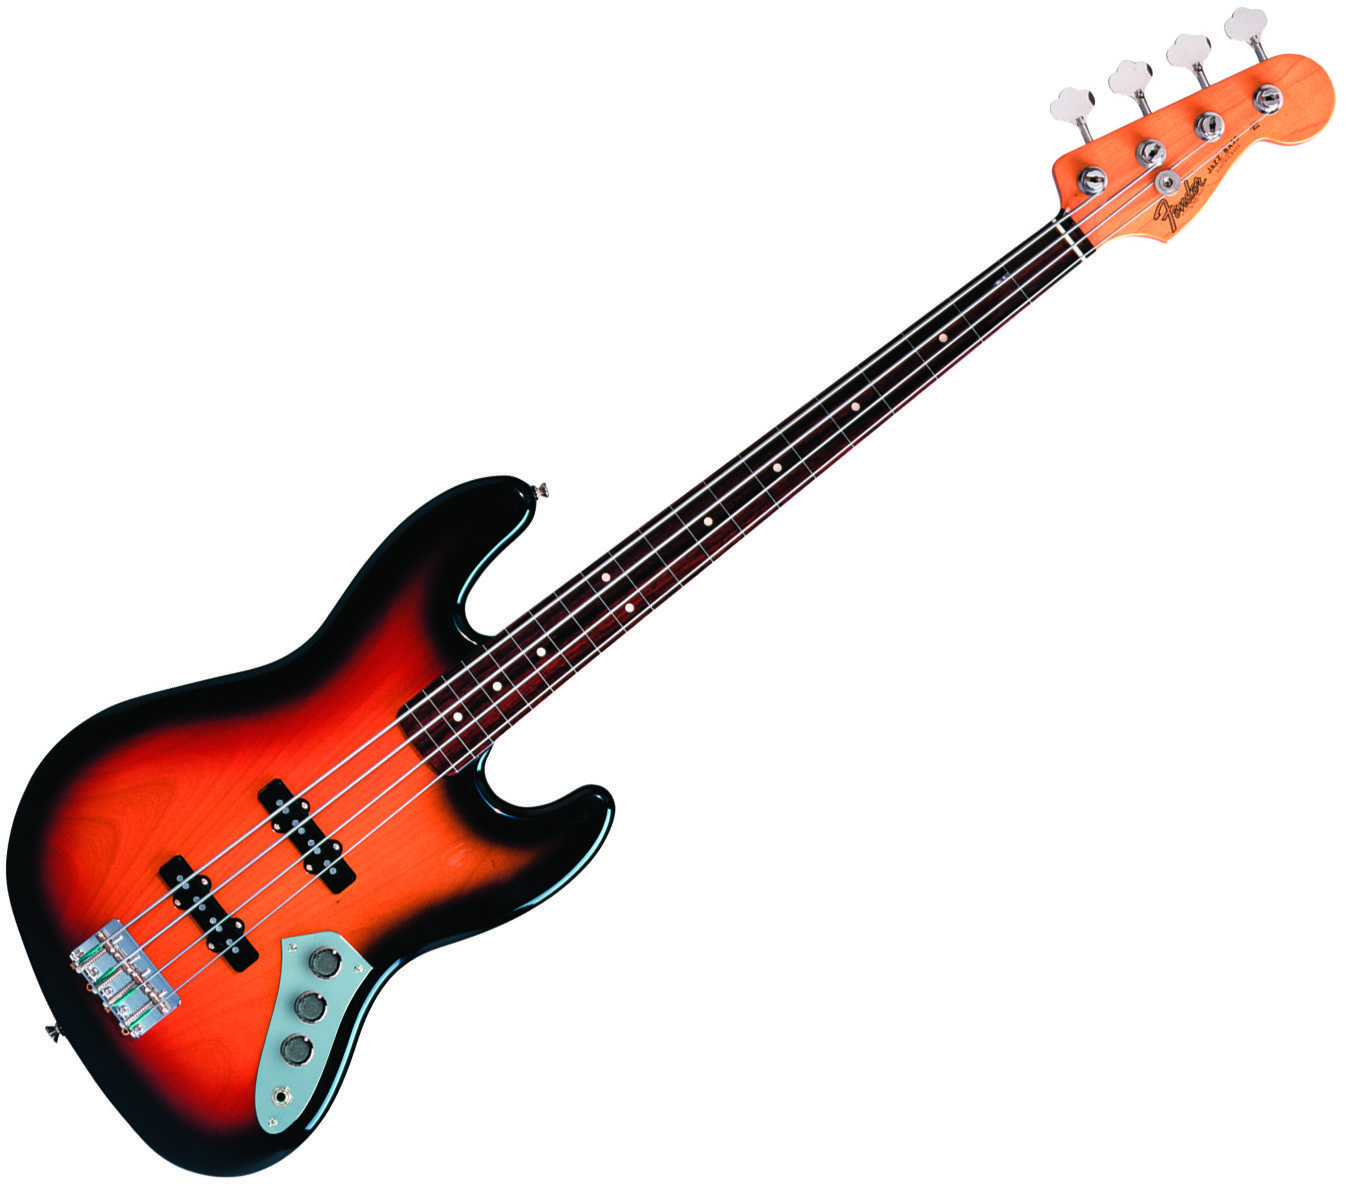 Bass час. Жако Пасториус бас. Jazz Bass Pastorius. Бас-гитара Fender Jaco Pastorius Tribute Jazz Bass Fretless. Fender lined Fretless Jazz Bass.